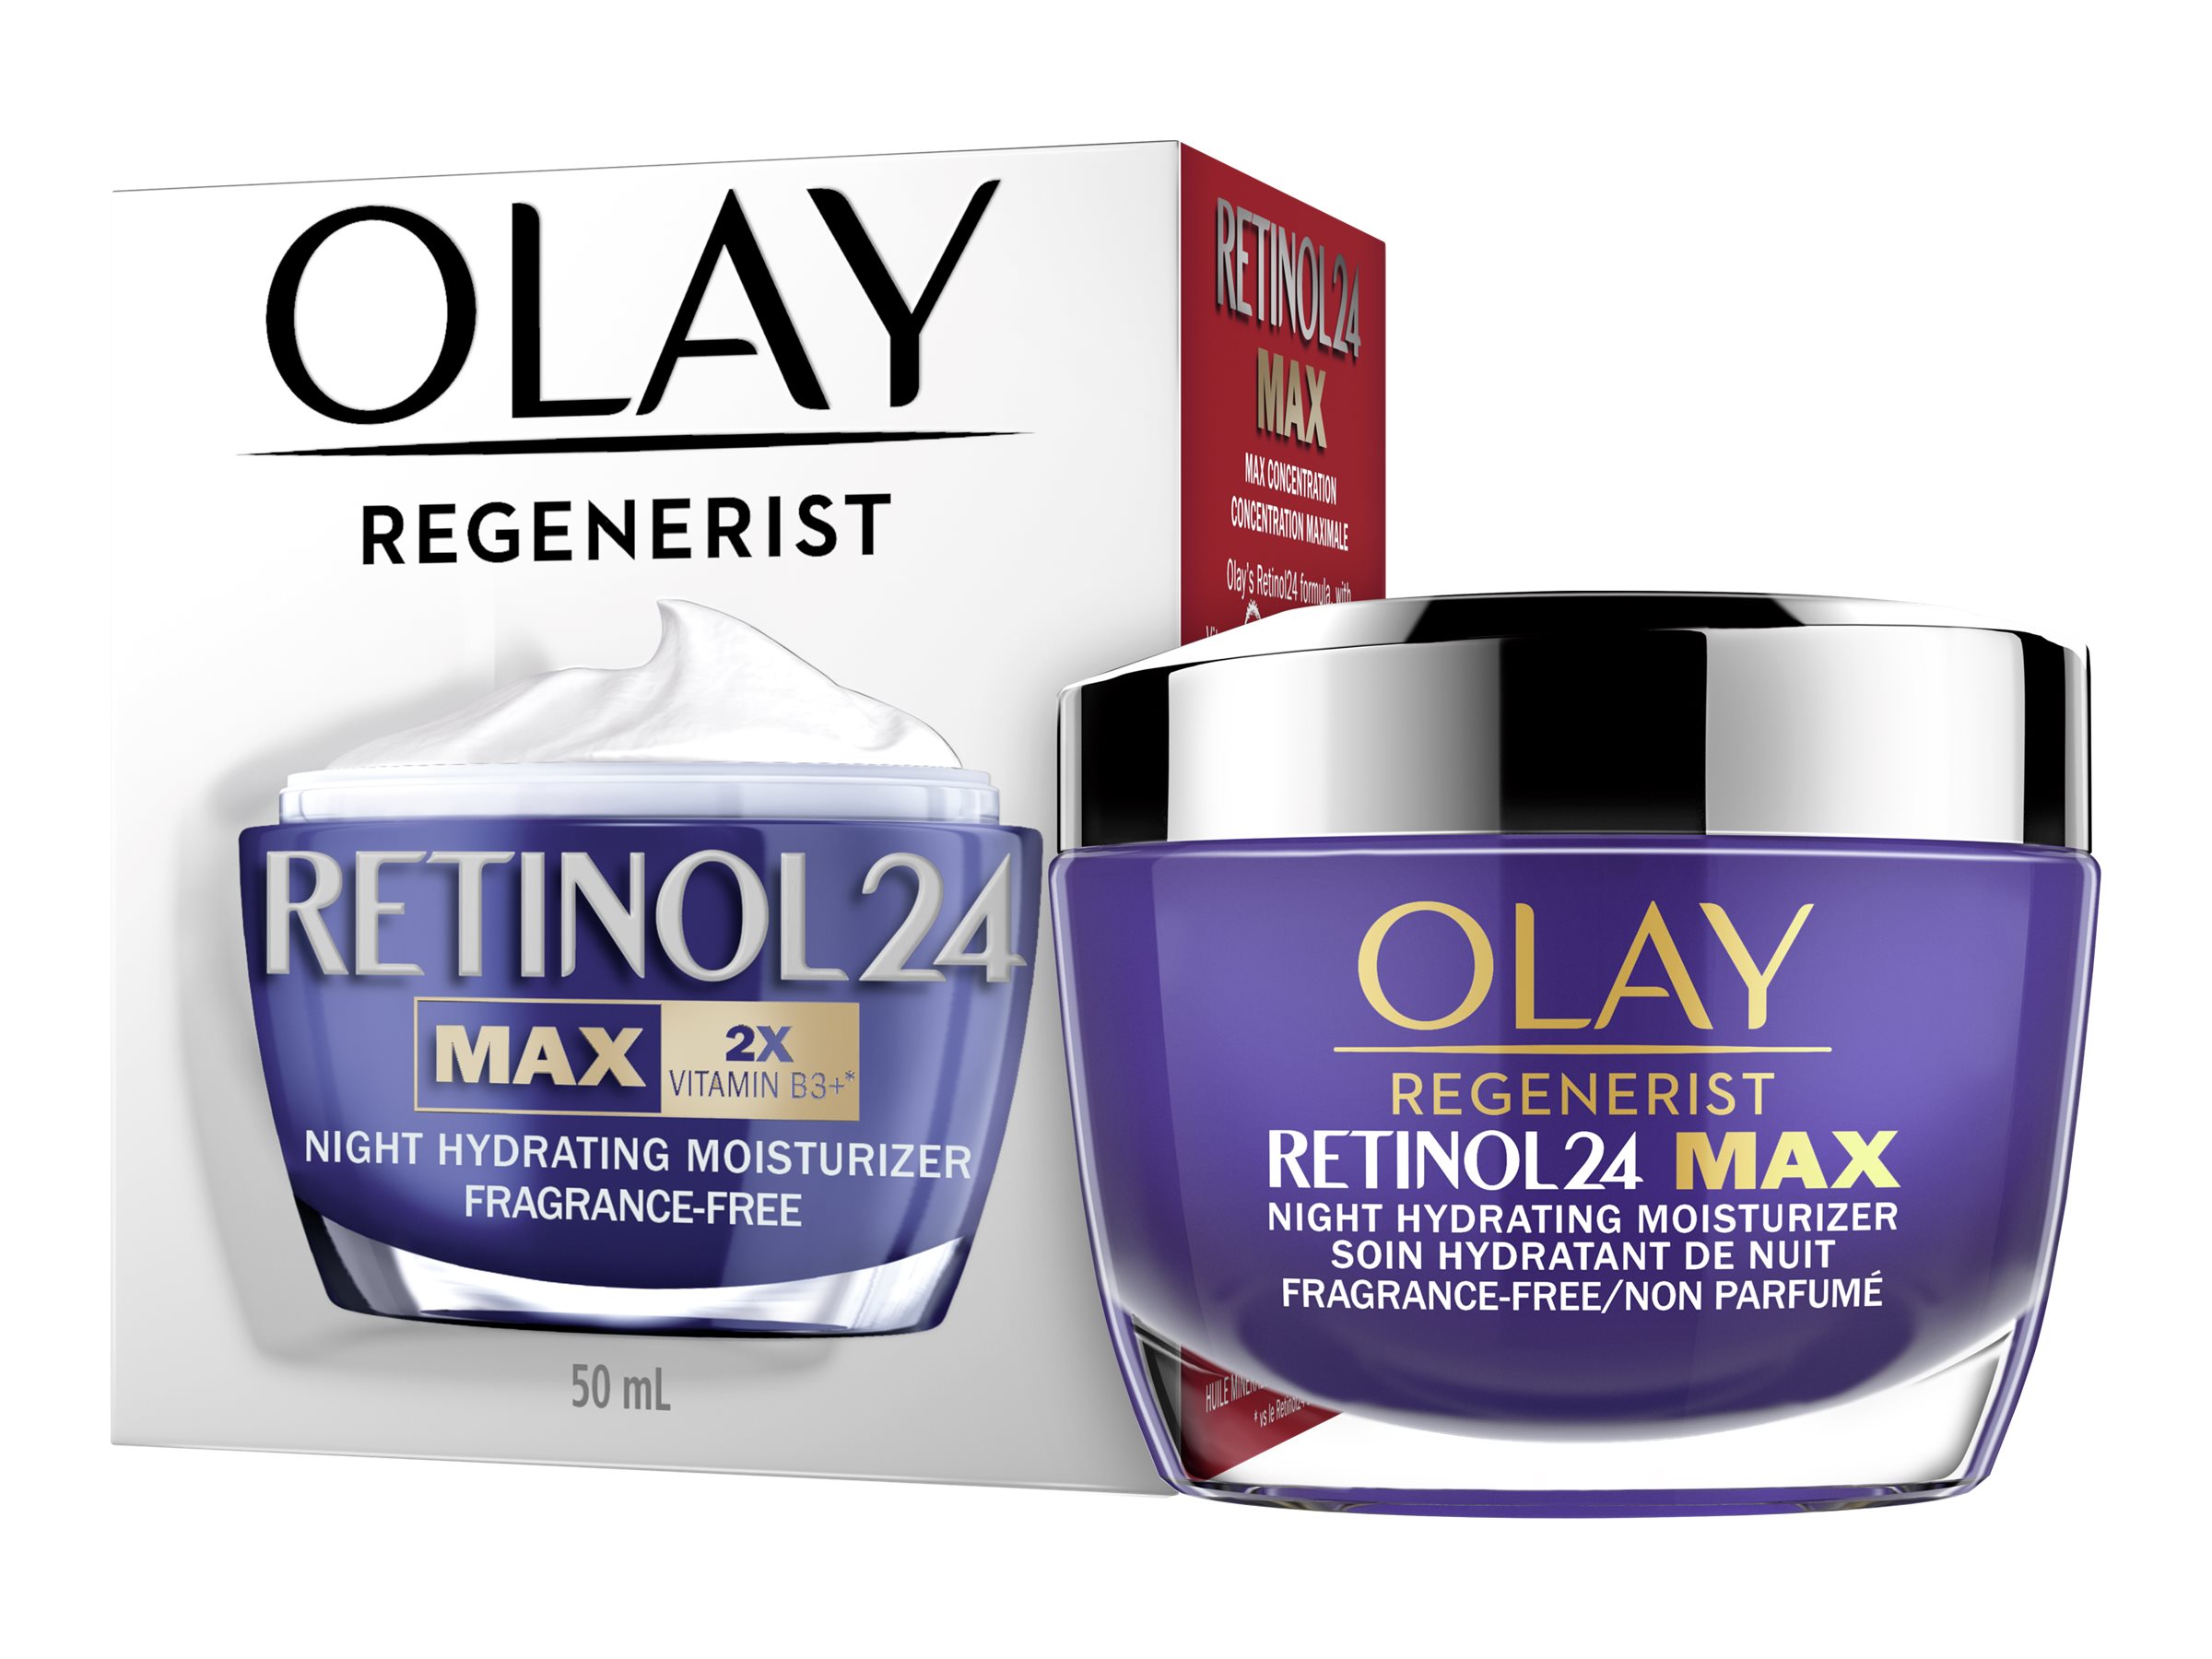 Olay Regenerist Retinol 24 MAX Night Hydrating Moisturizer - 50ml